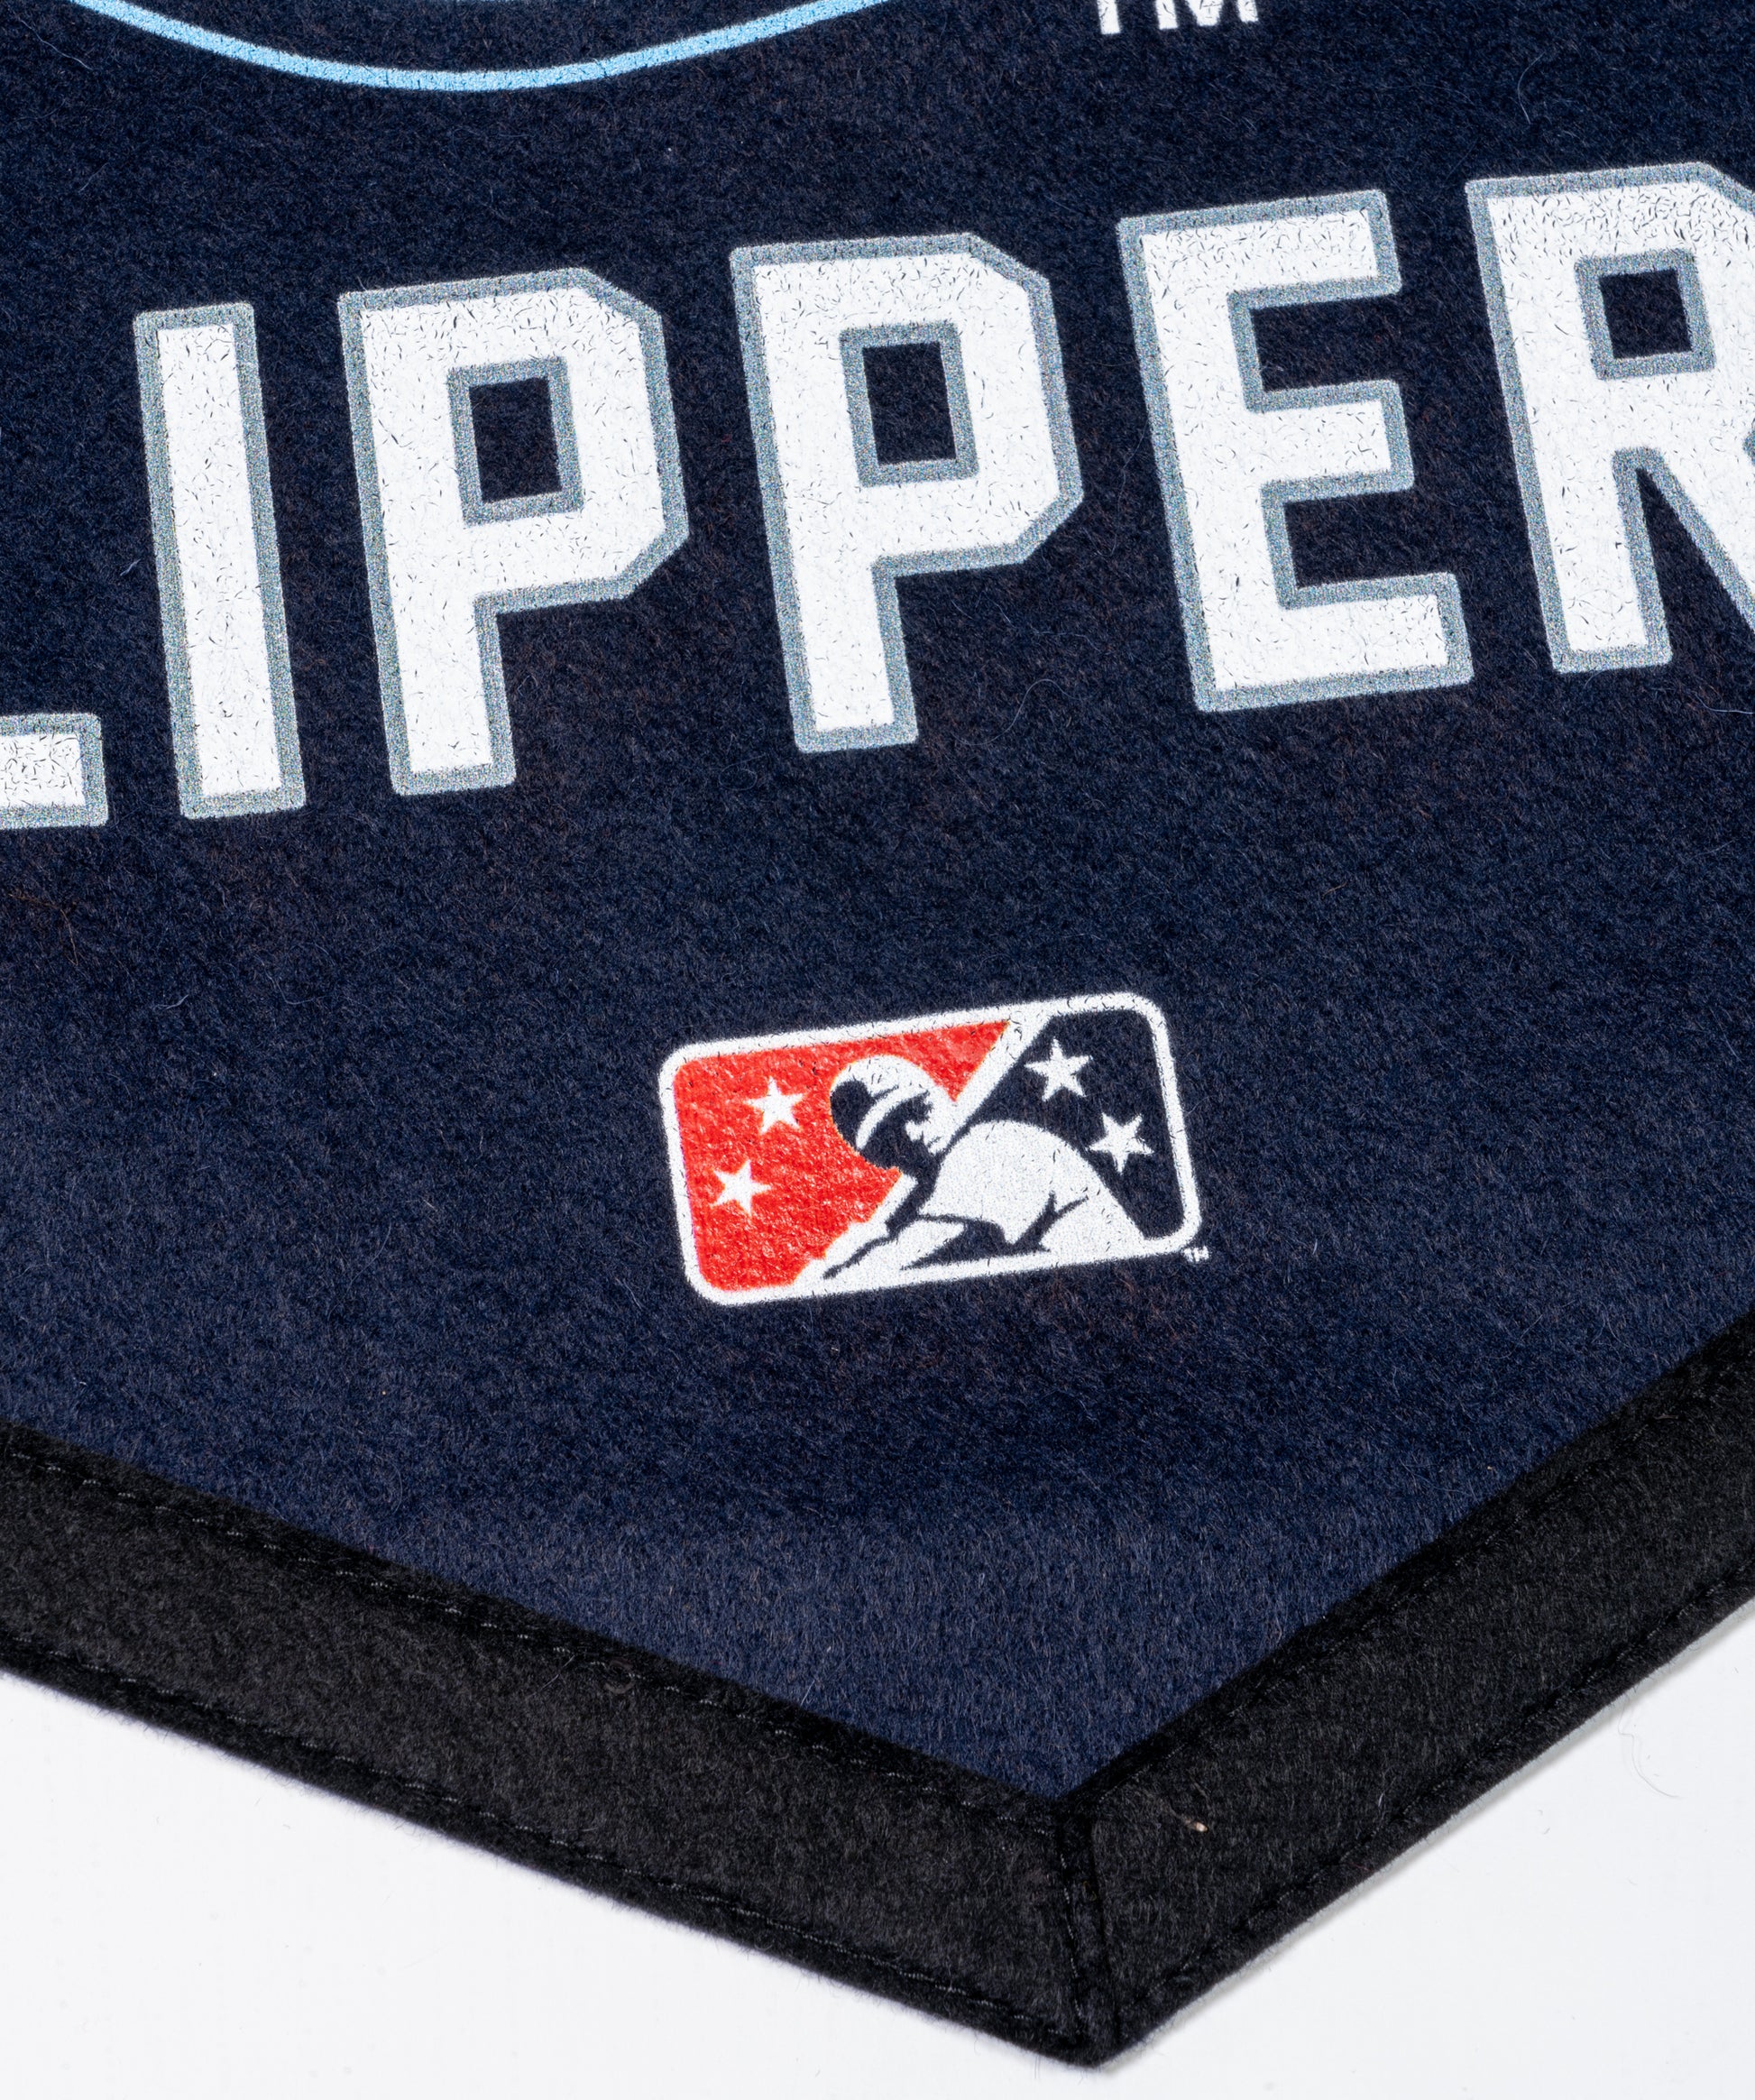 Columbus Clippers Minor League Baseball Fan Jerseys for sale